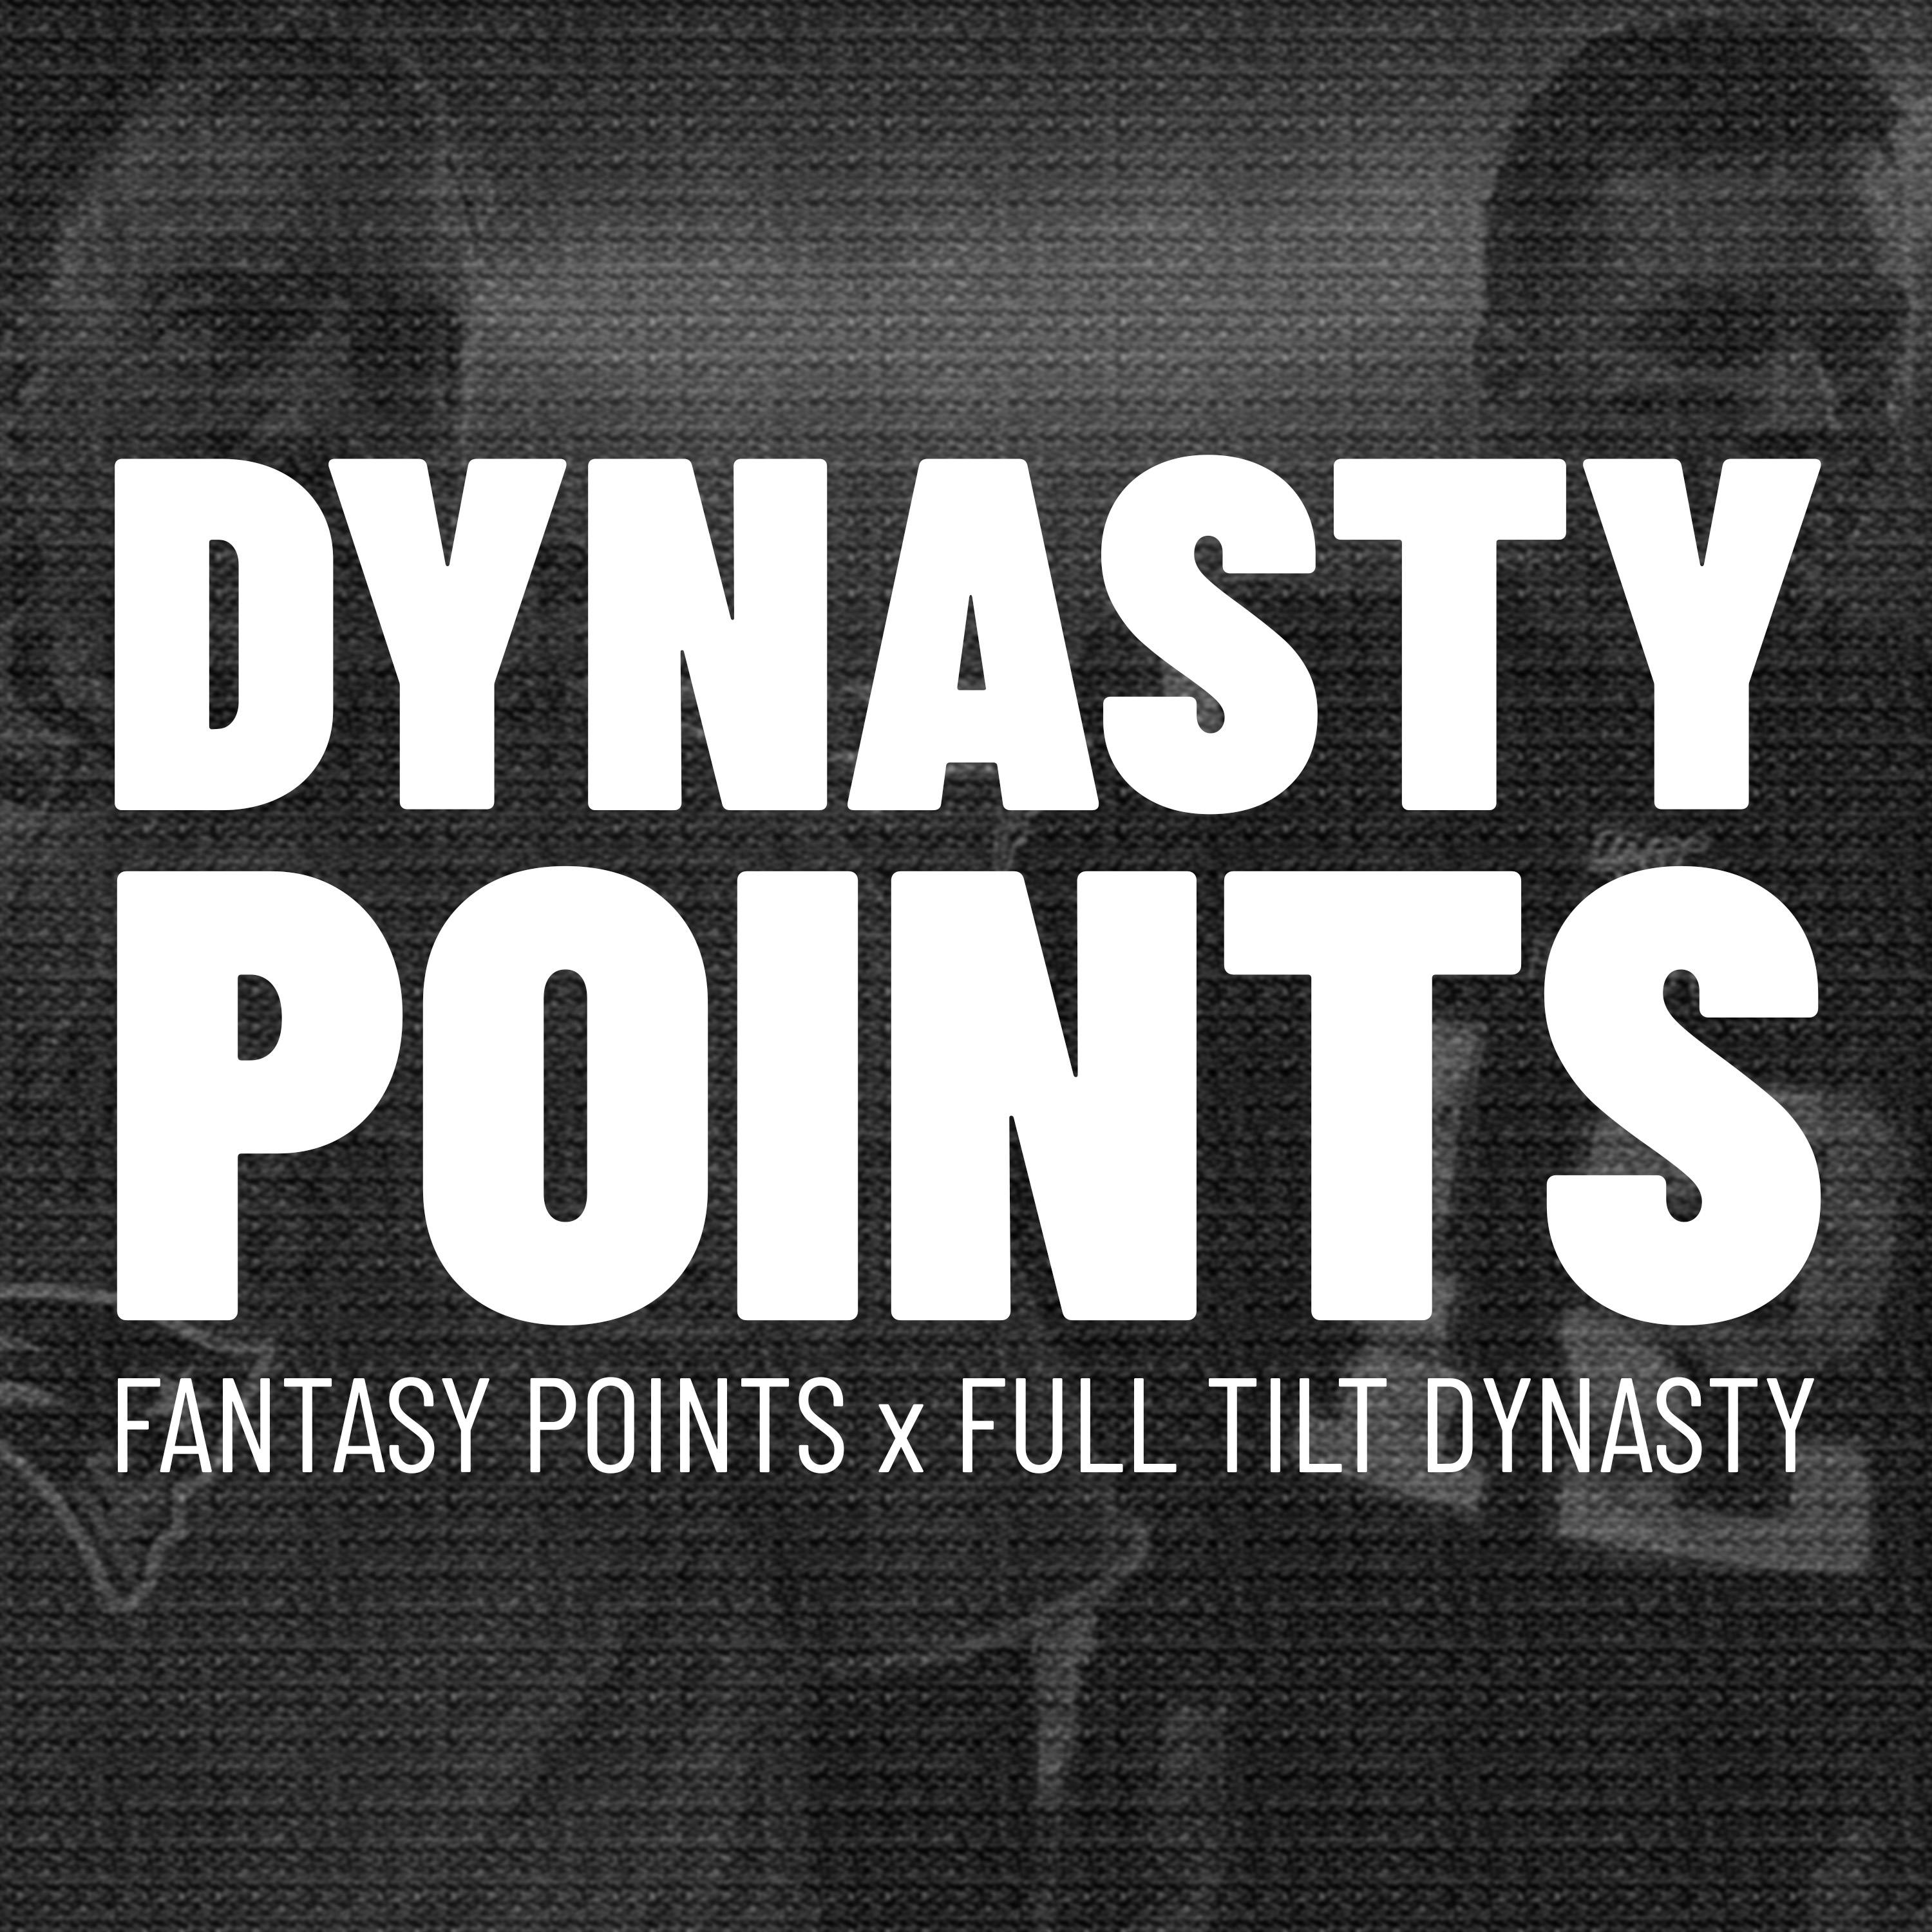 Fantasy Points NFLPodcast Logo